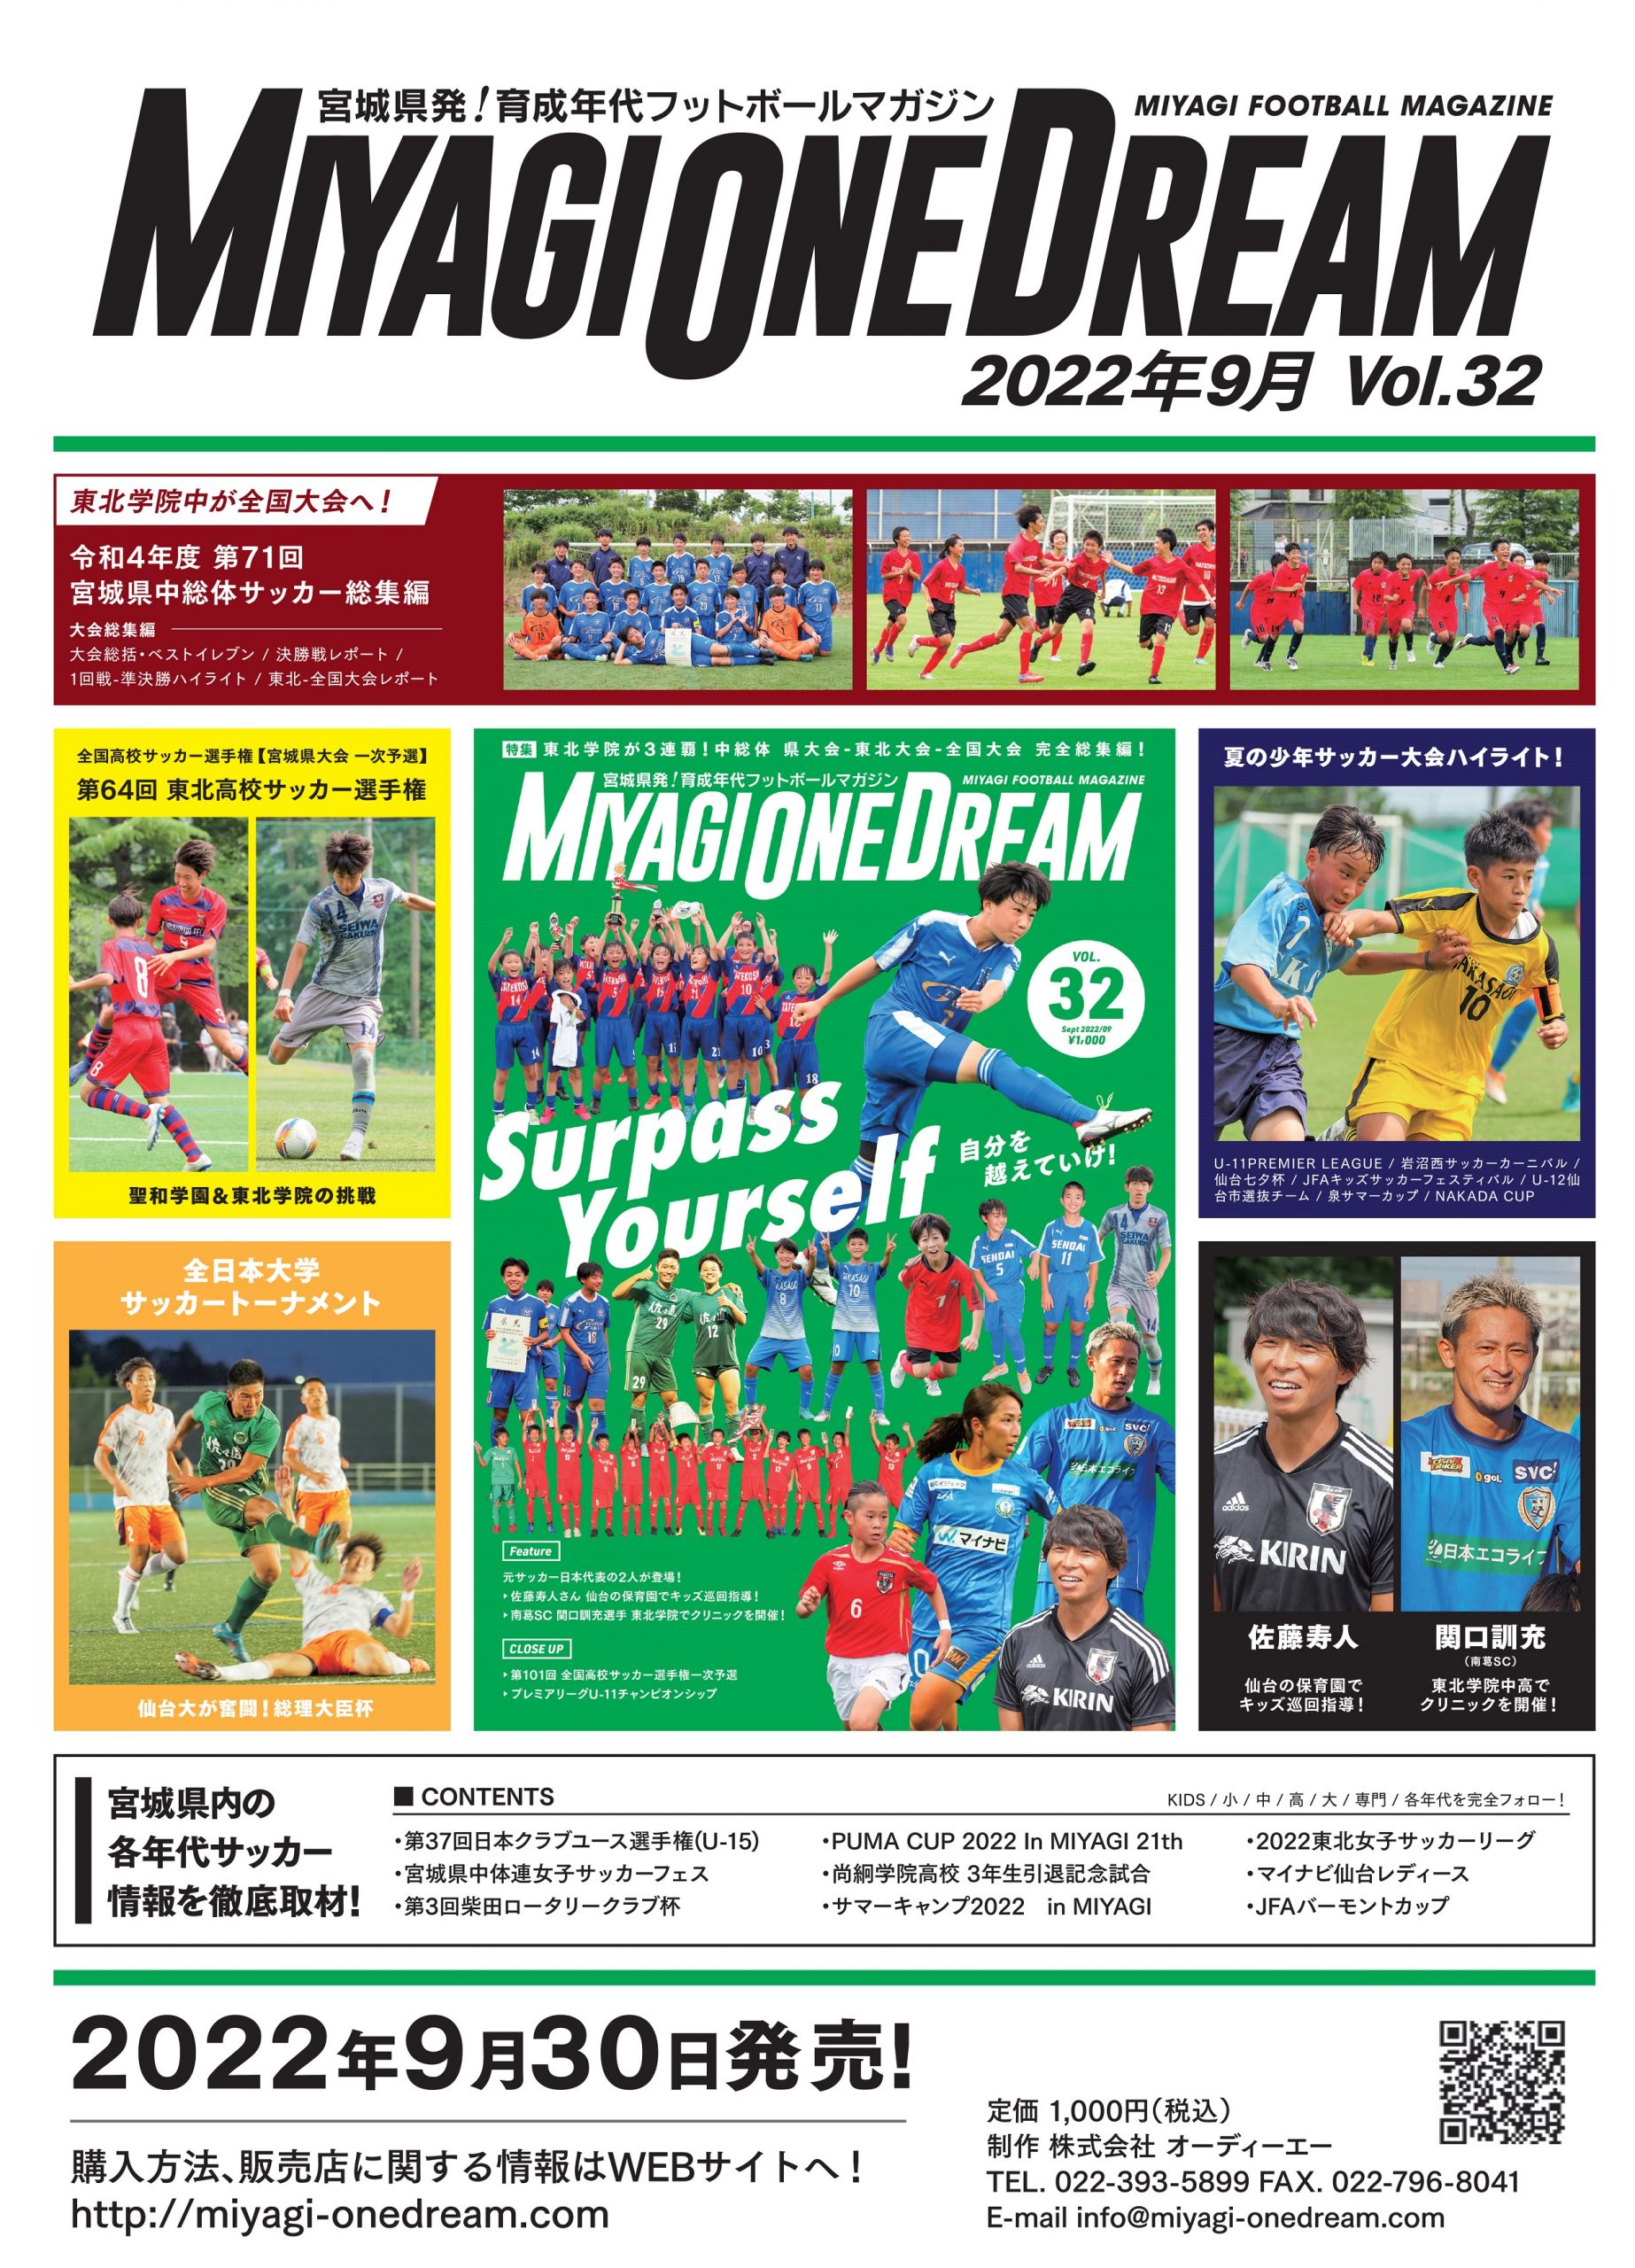 MIYAGI ONE DREAM Vol.32 販売店舗に関するお知らせ！【9/30発売